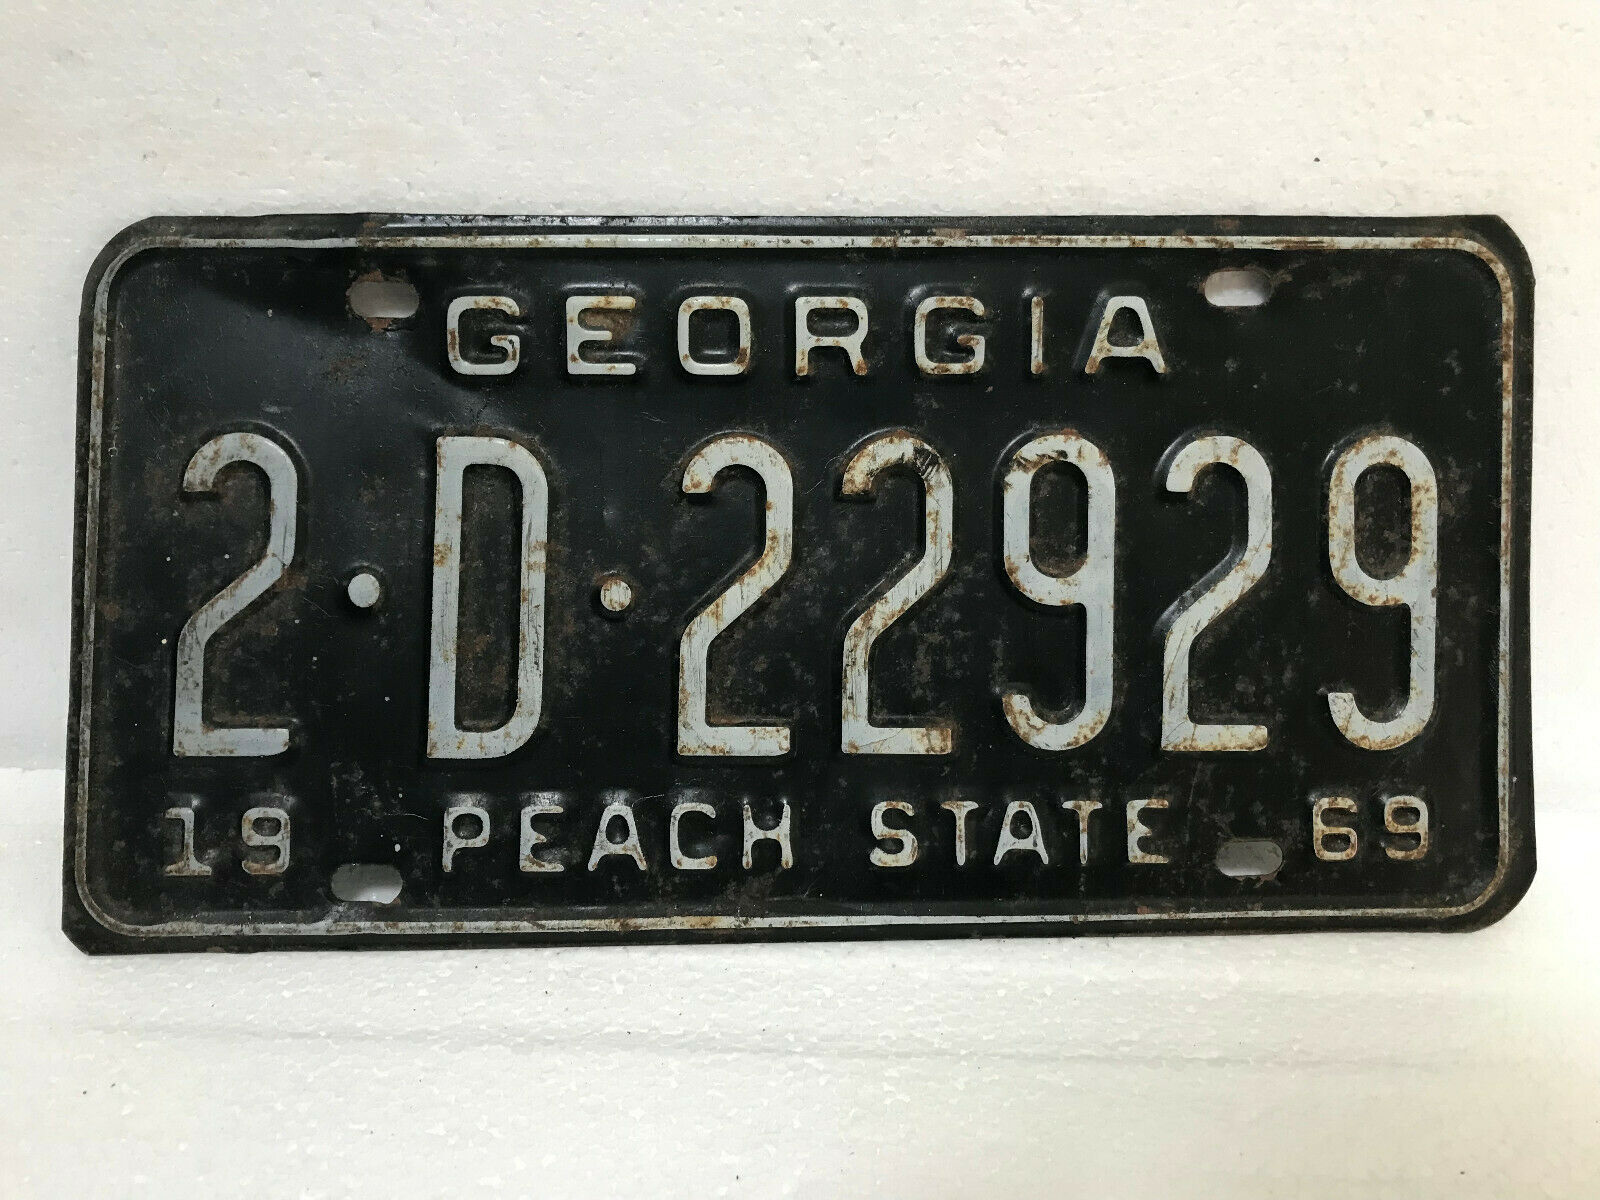 1969 Georgia License Plate - All Original 2-d-22929